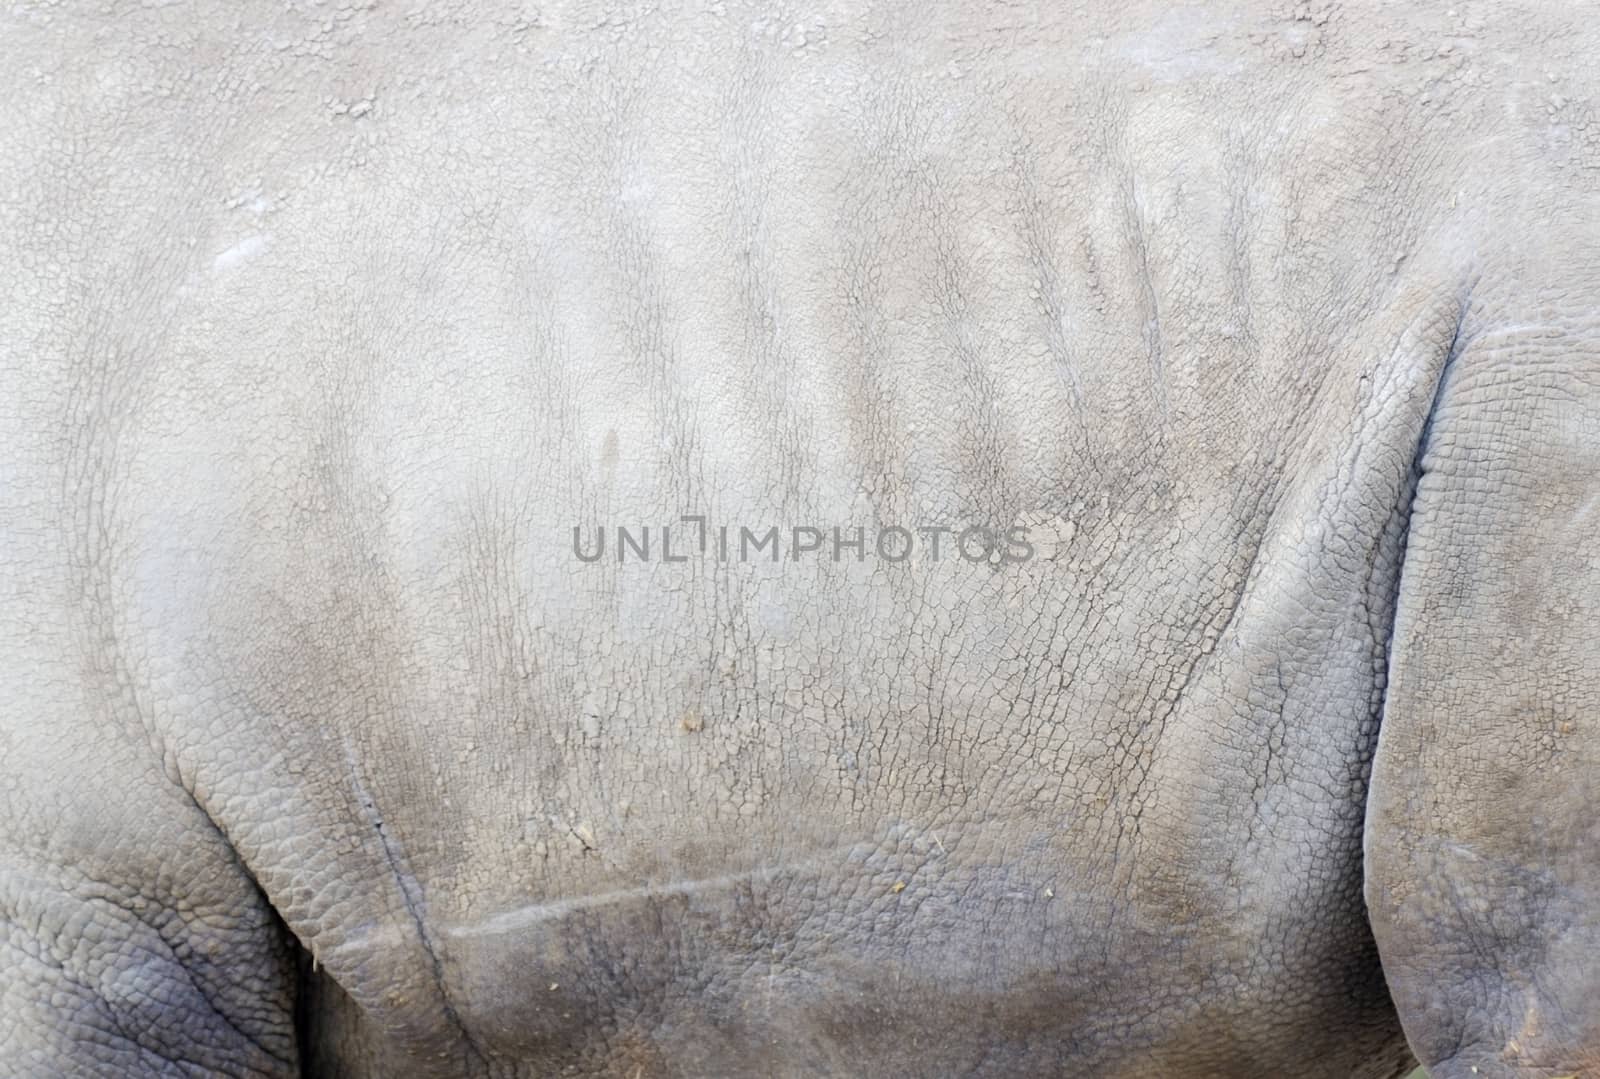 Rhino Closeup by kmwphotography